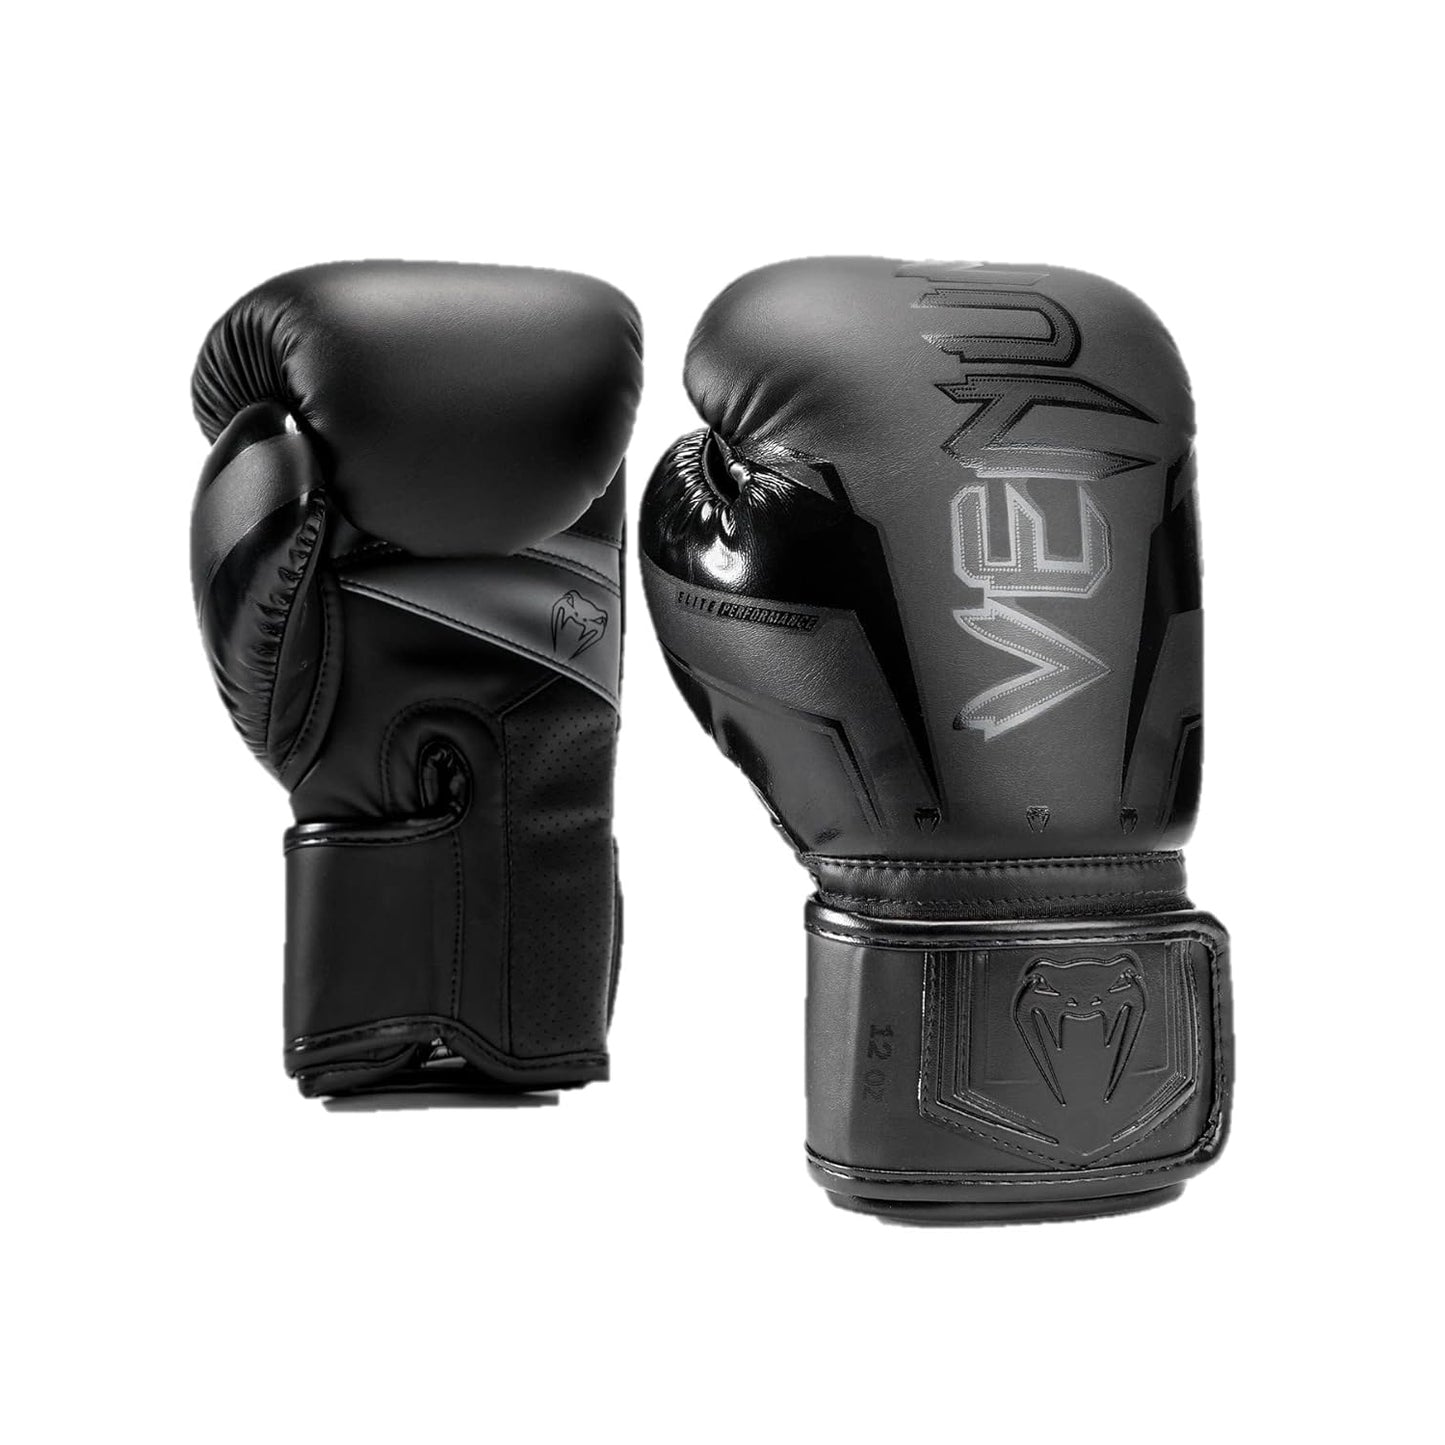 Venum Elite EVO Boxing Gloves, Black/Black - Best Price online Prokicksports.com